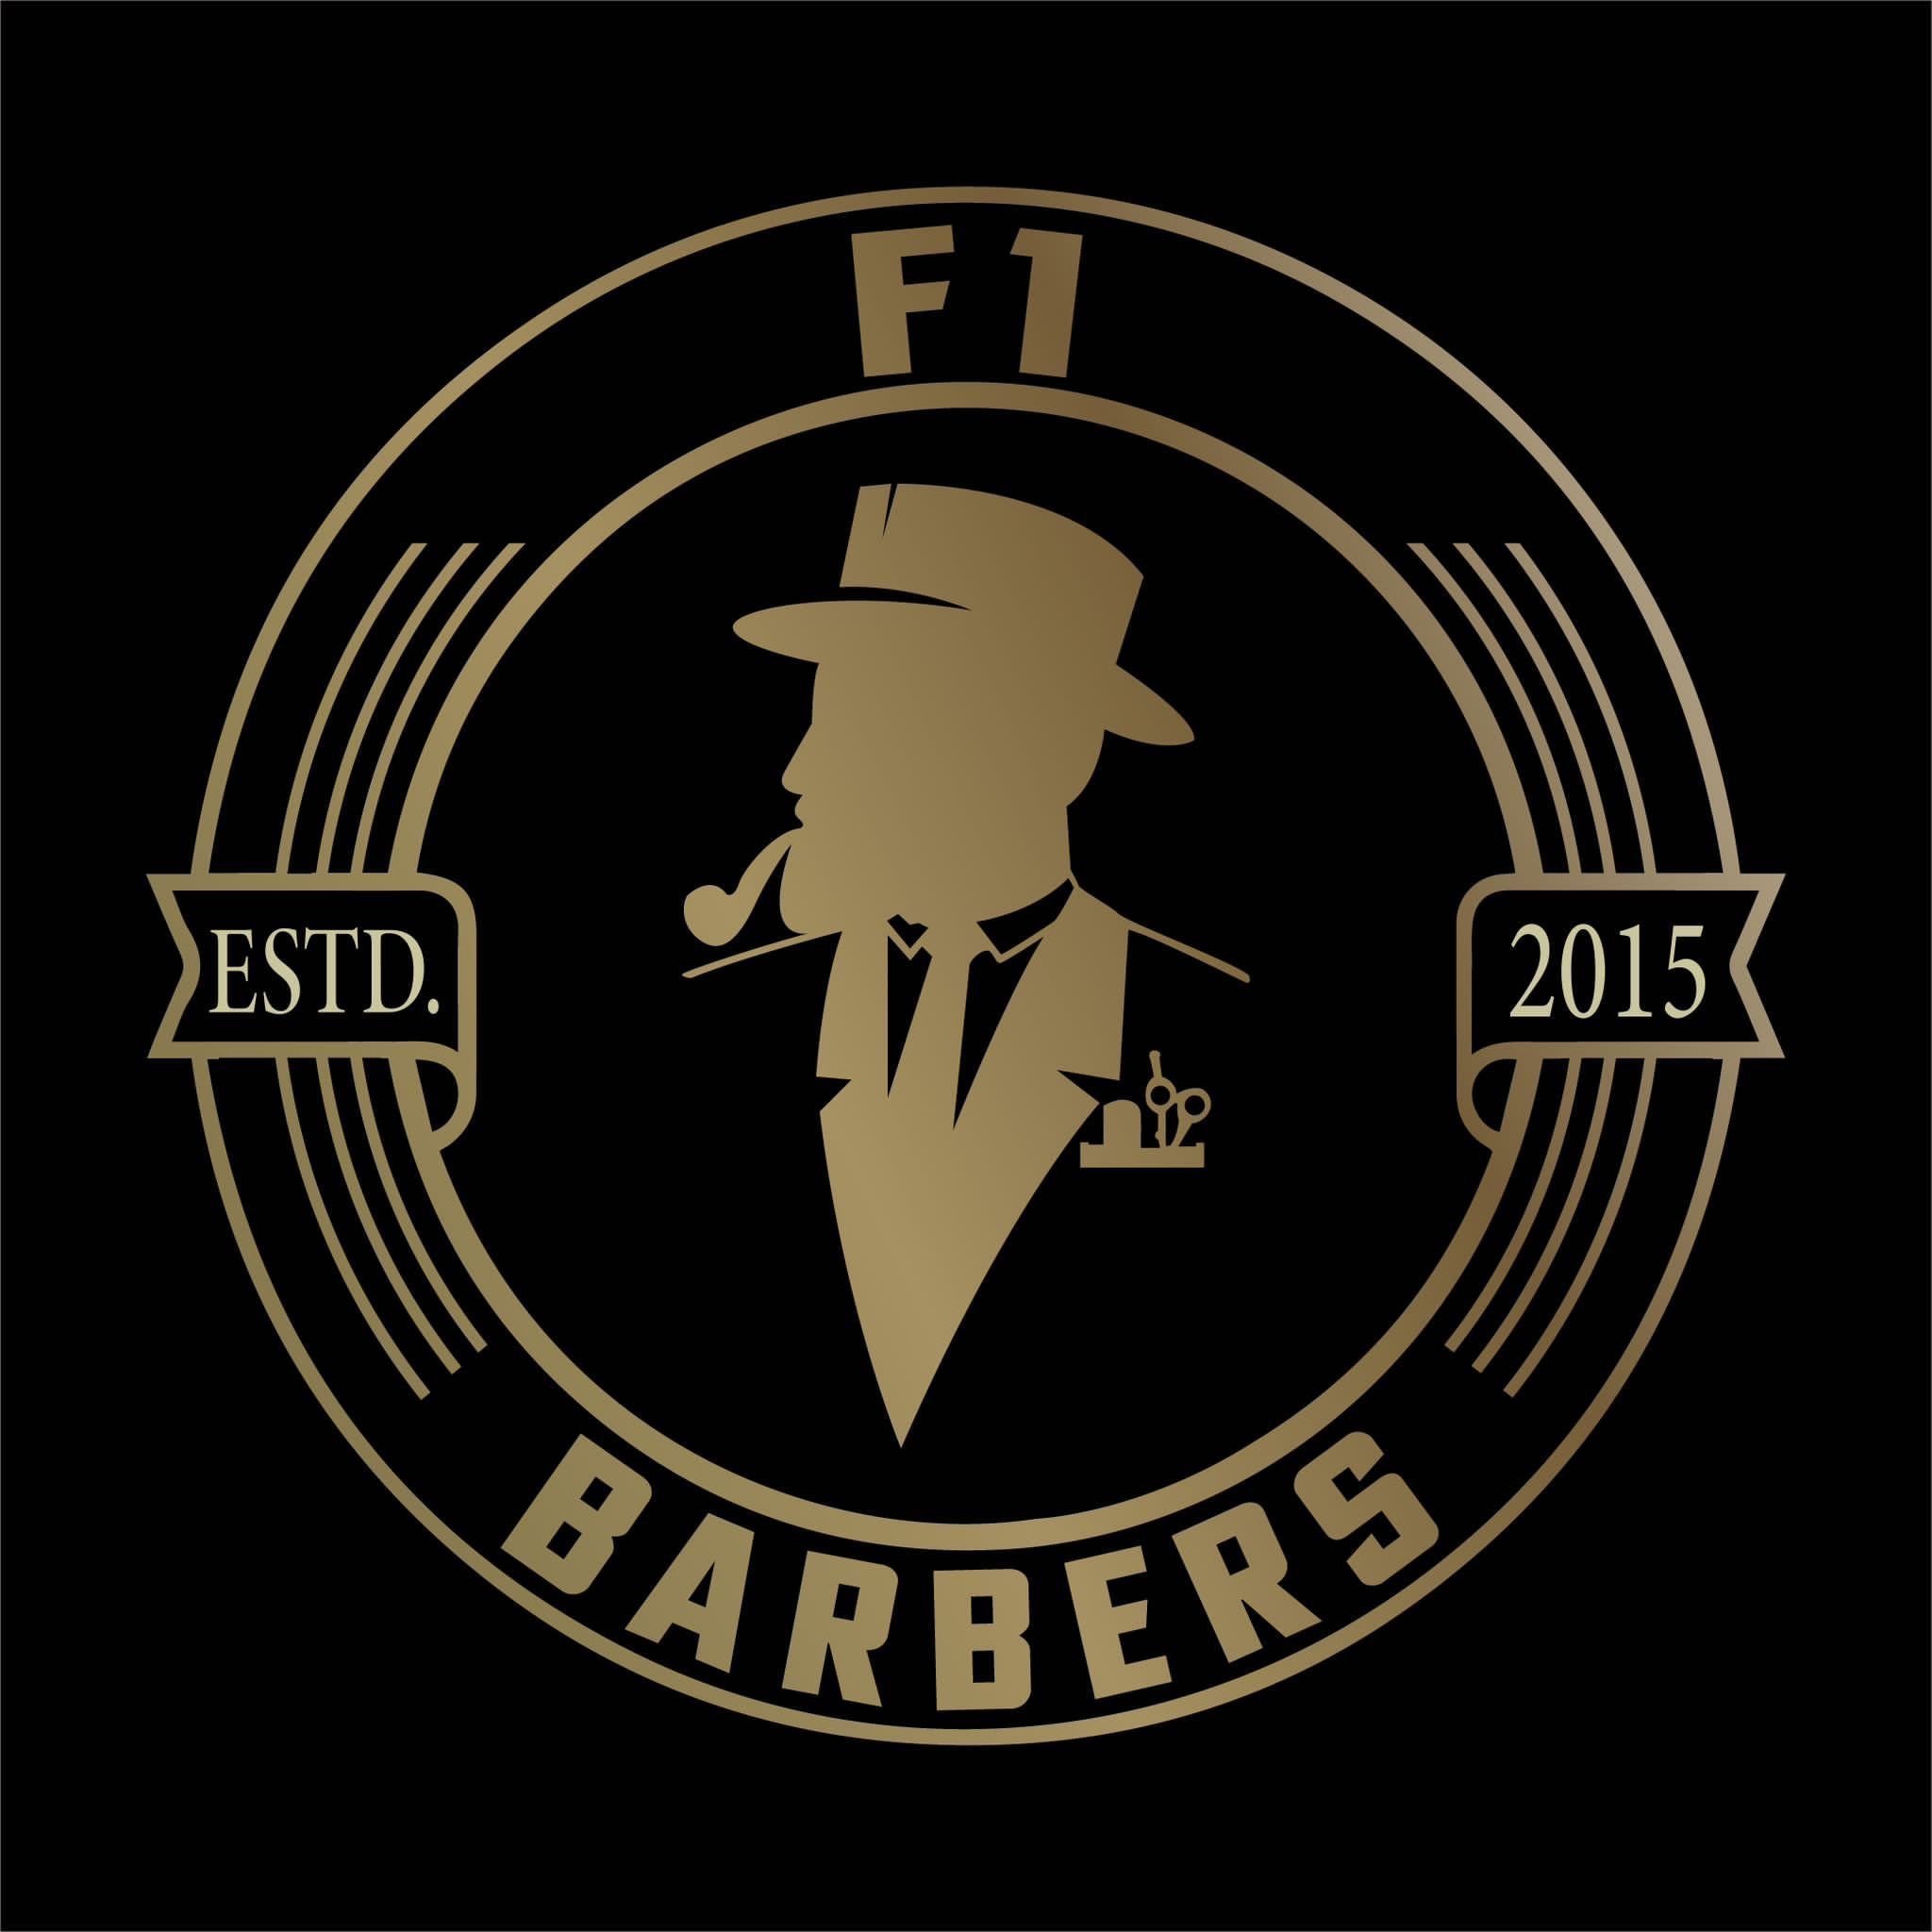 F1 Barbers, Goodmayes Retail Park, RM6 4HX, London, Romford